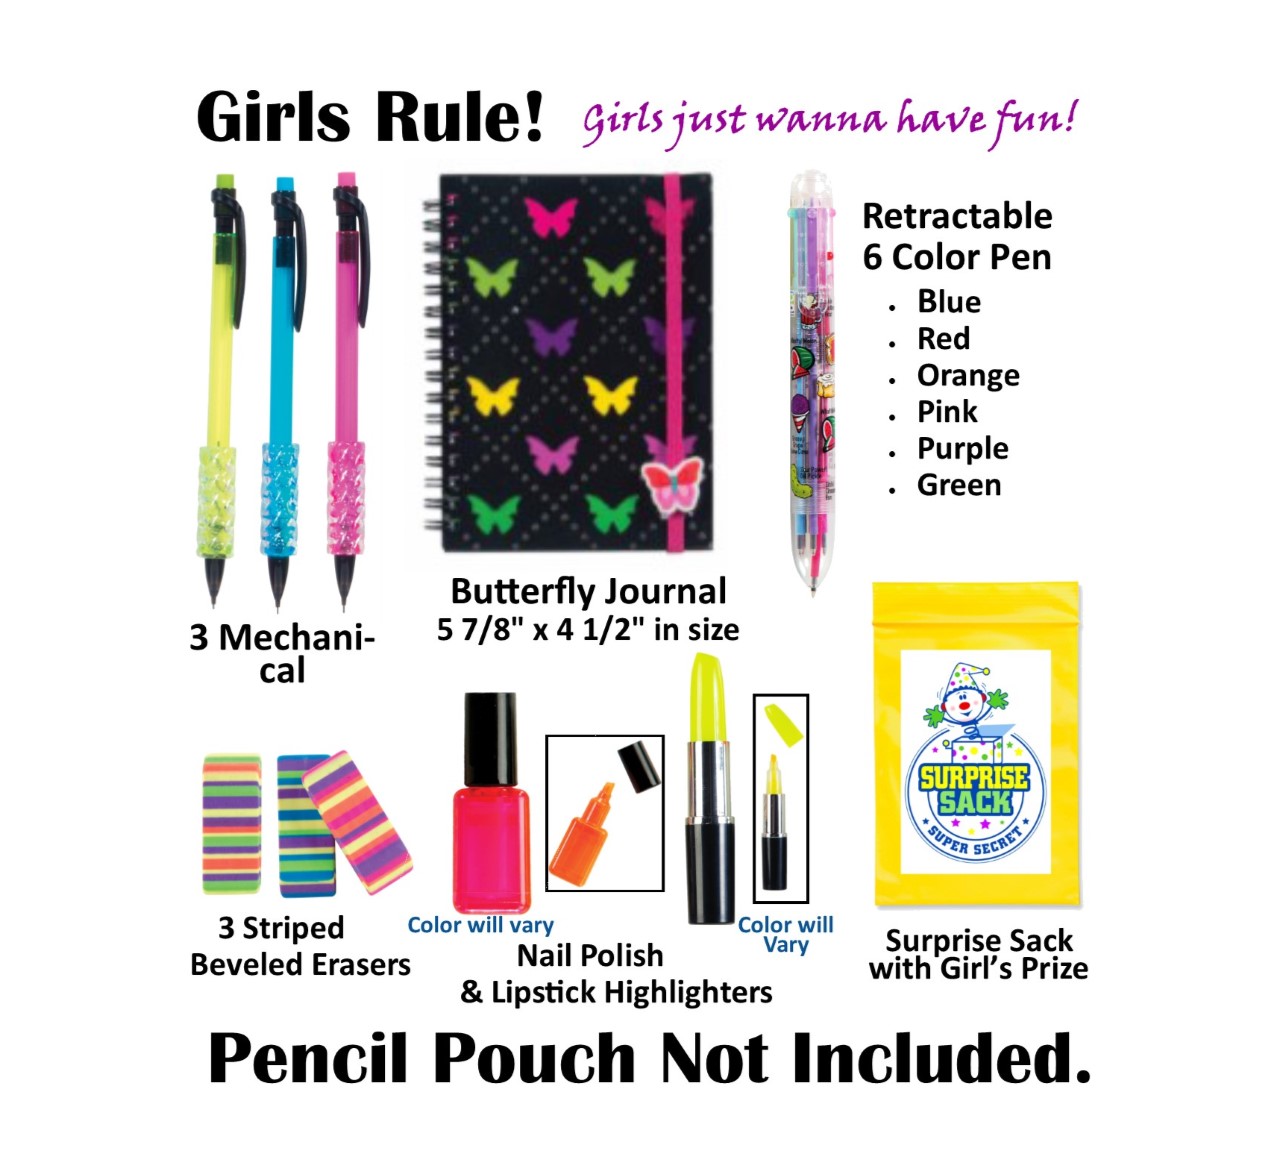 https://secretsurprisesack.com/wp-content/uploads/2018/08/Girls-Rule-No-Pouch.jpg